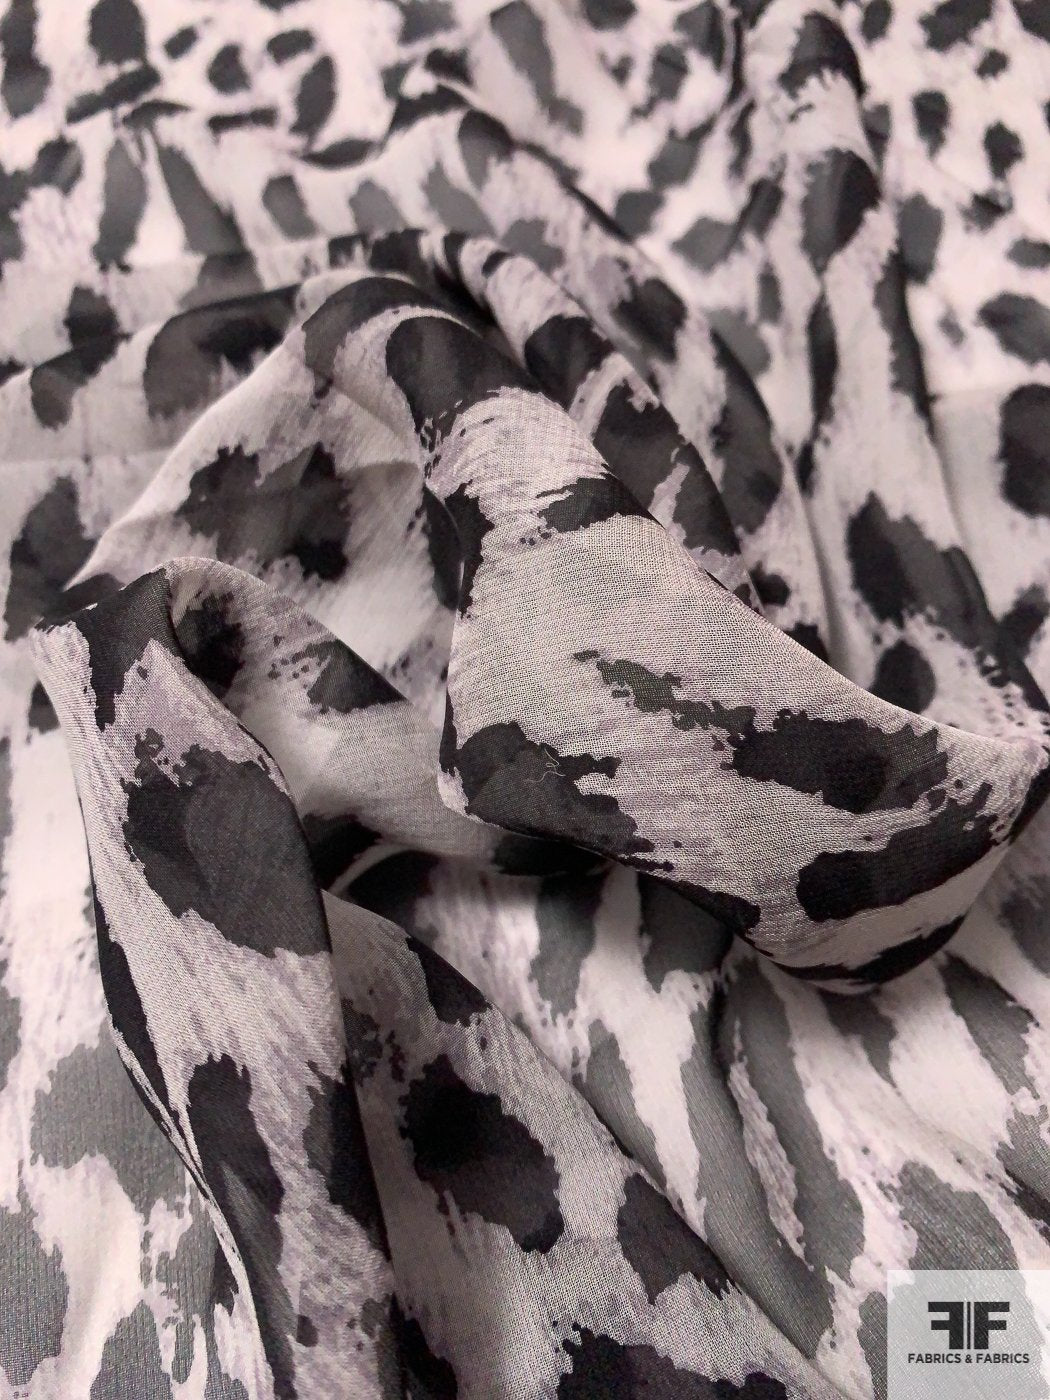 Animal Pattern Printed Silk Chiffon - Black / Grey